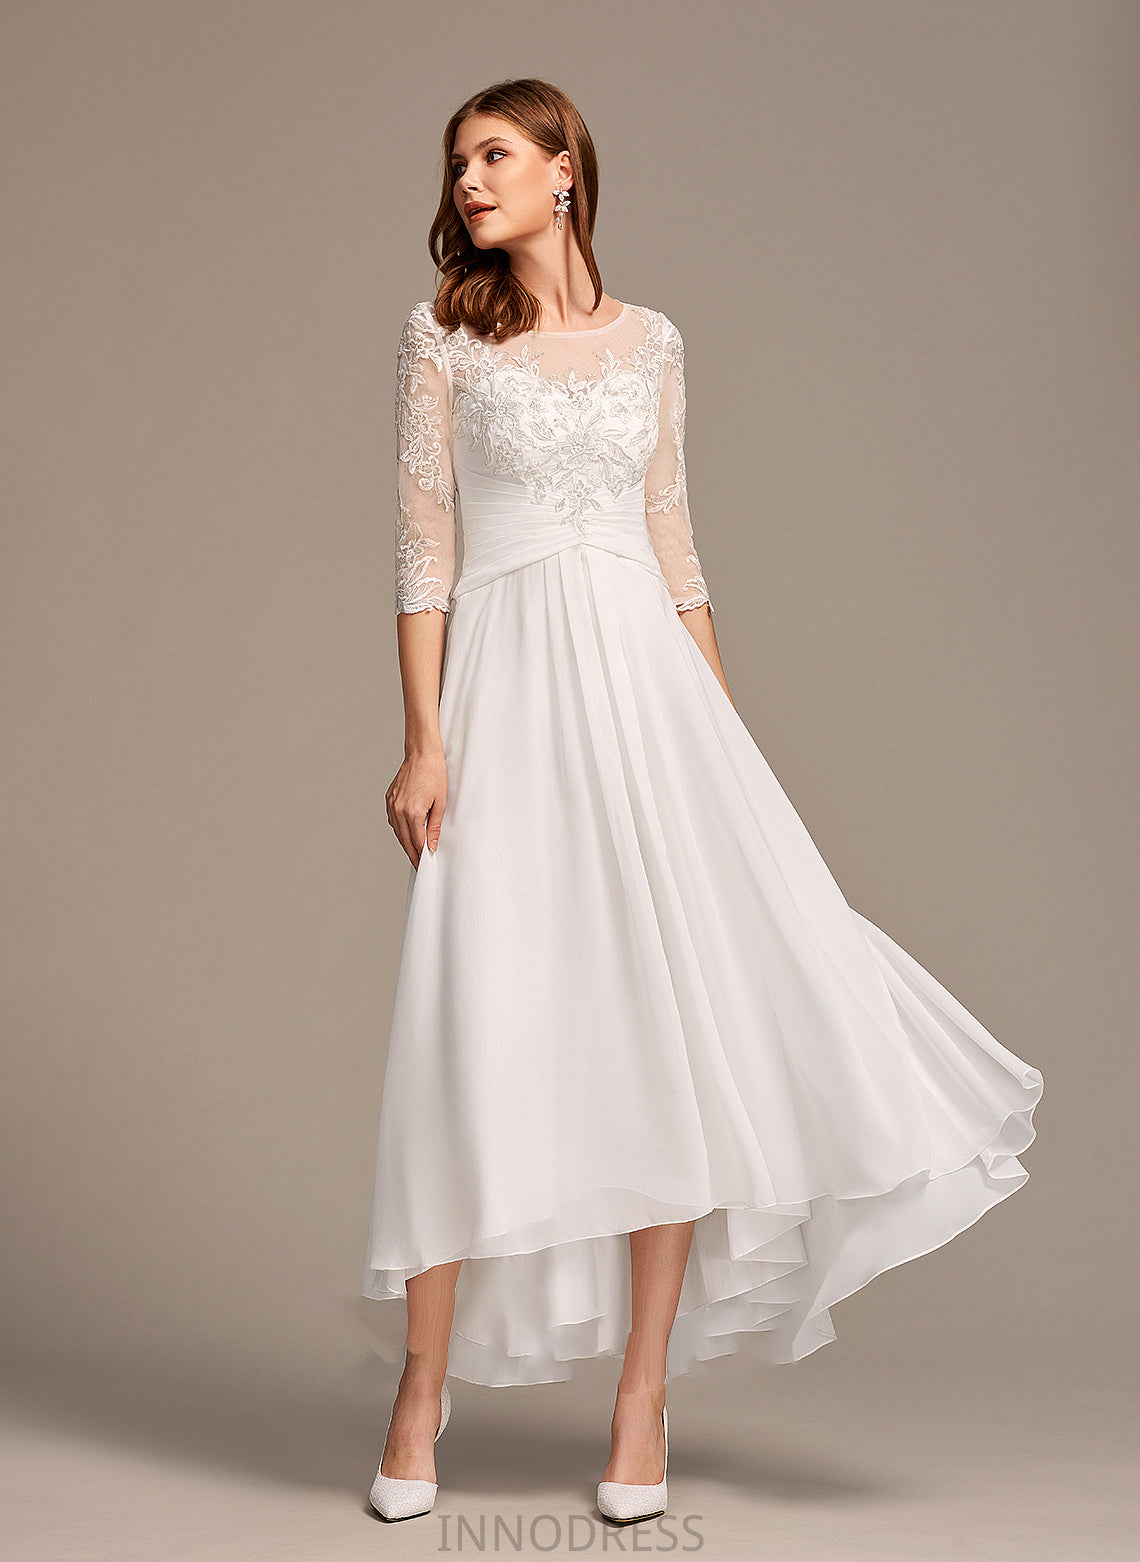 Makaila Wedding Dresses Dress A-Line Wedding Asymmetrical Lace With Illusion